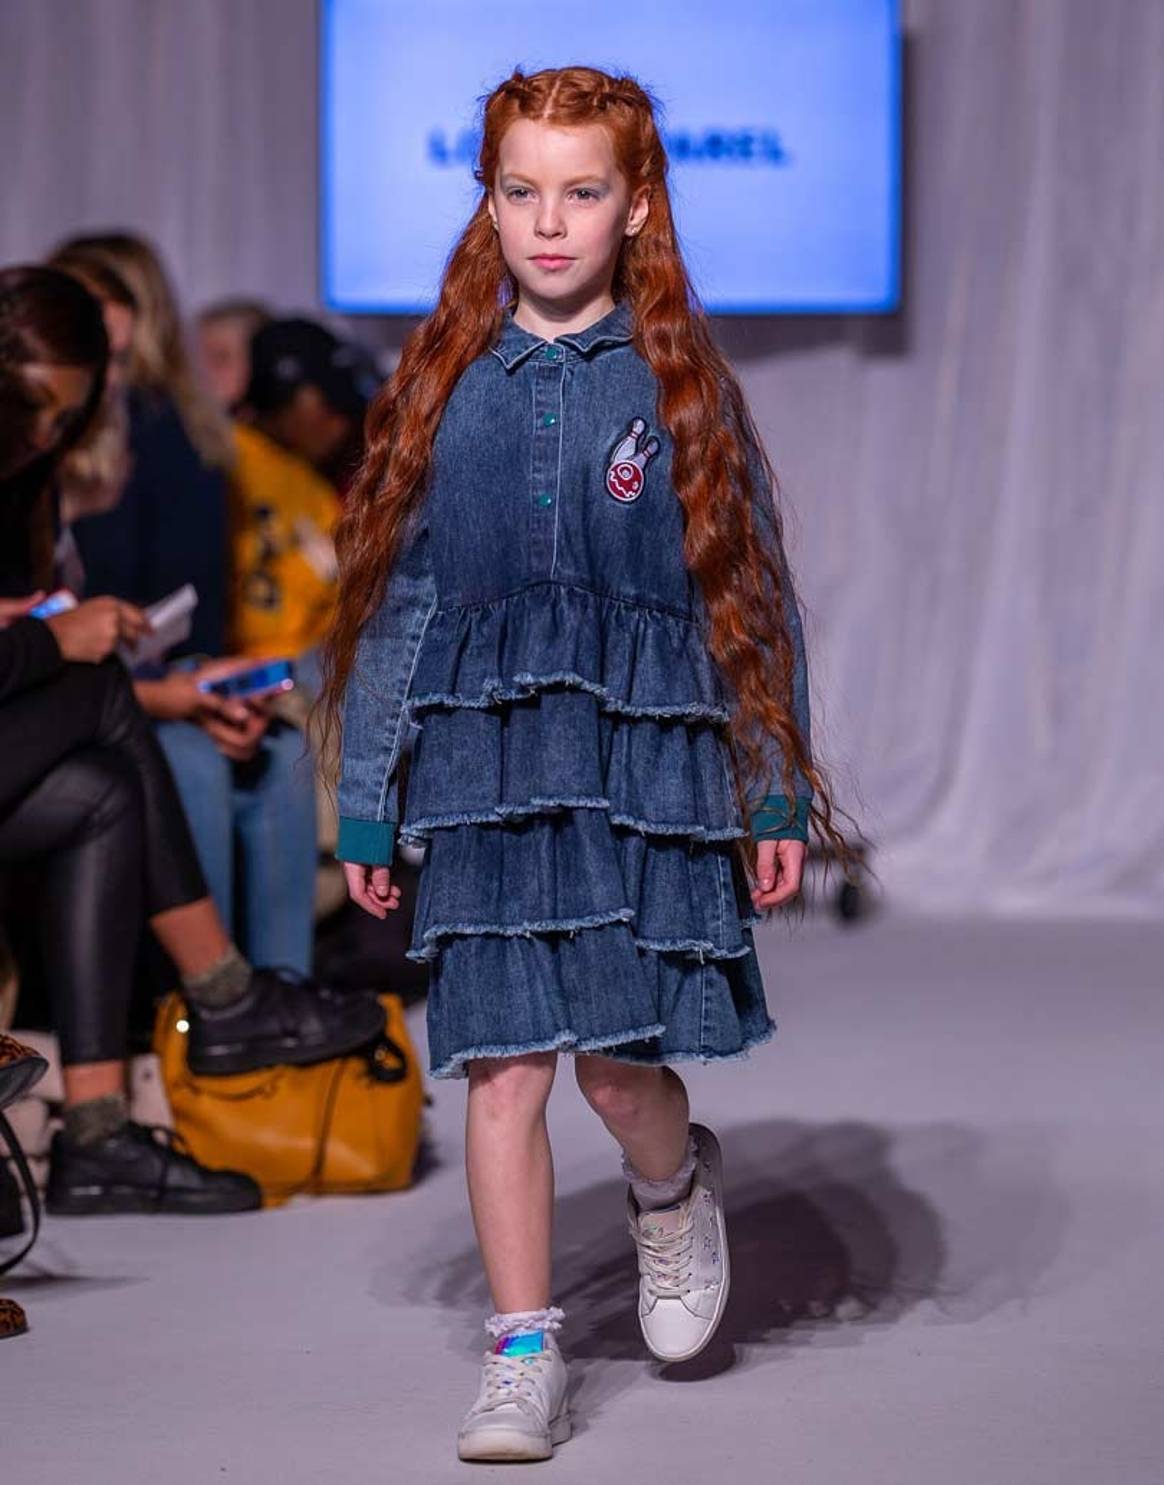 Mini Mode - London Kids Fashion Week celebrates third season